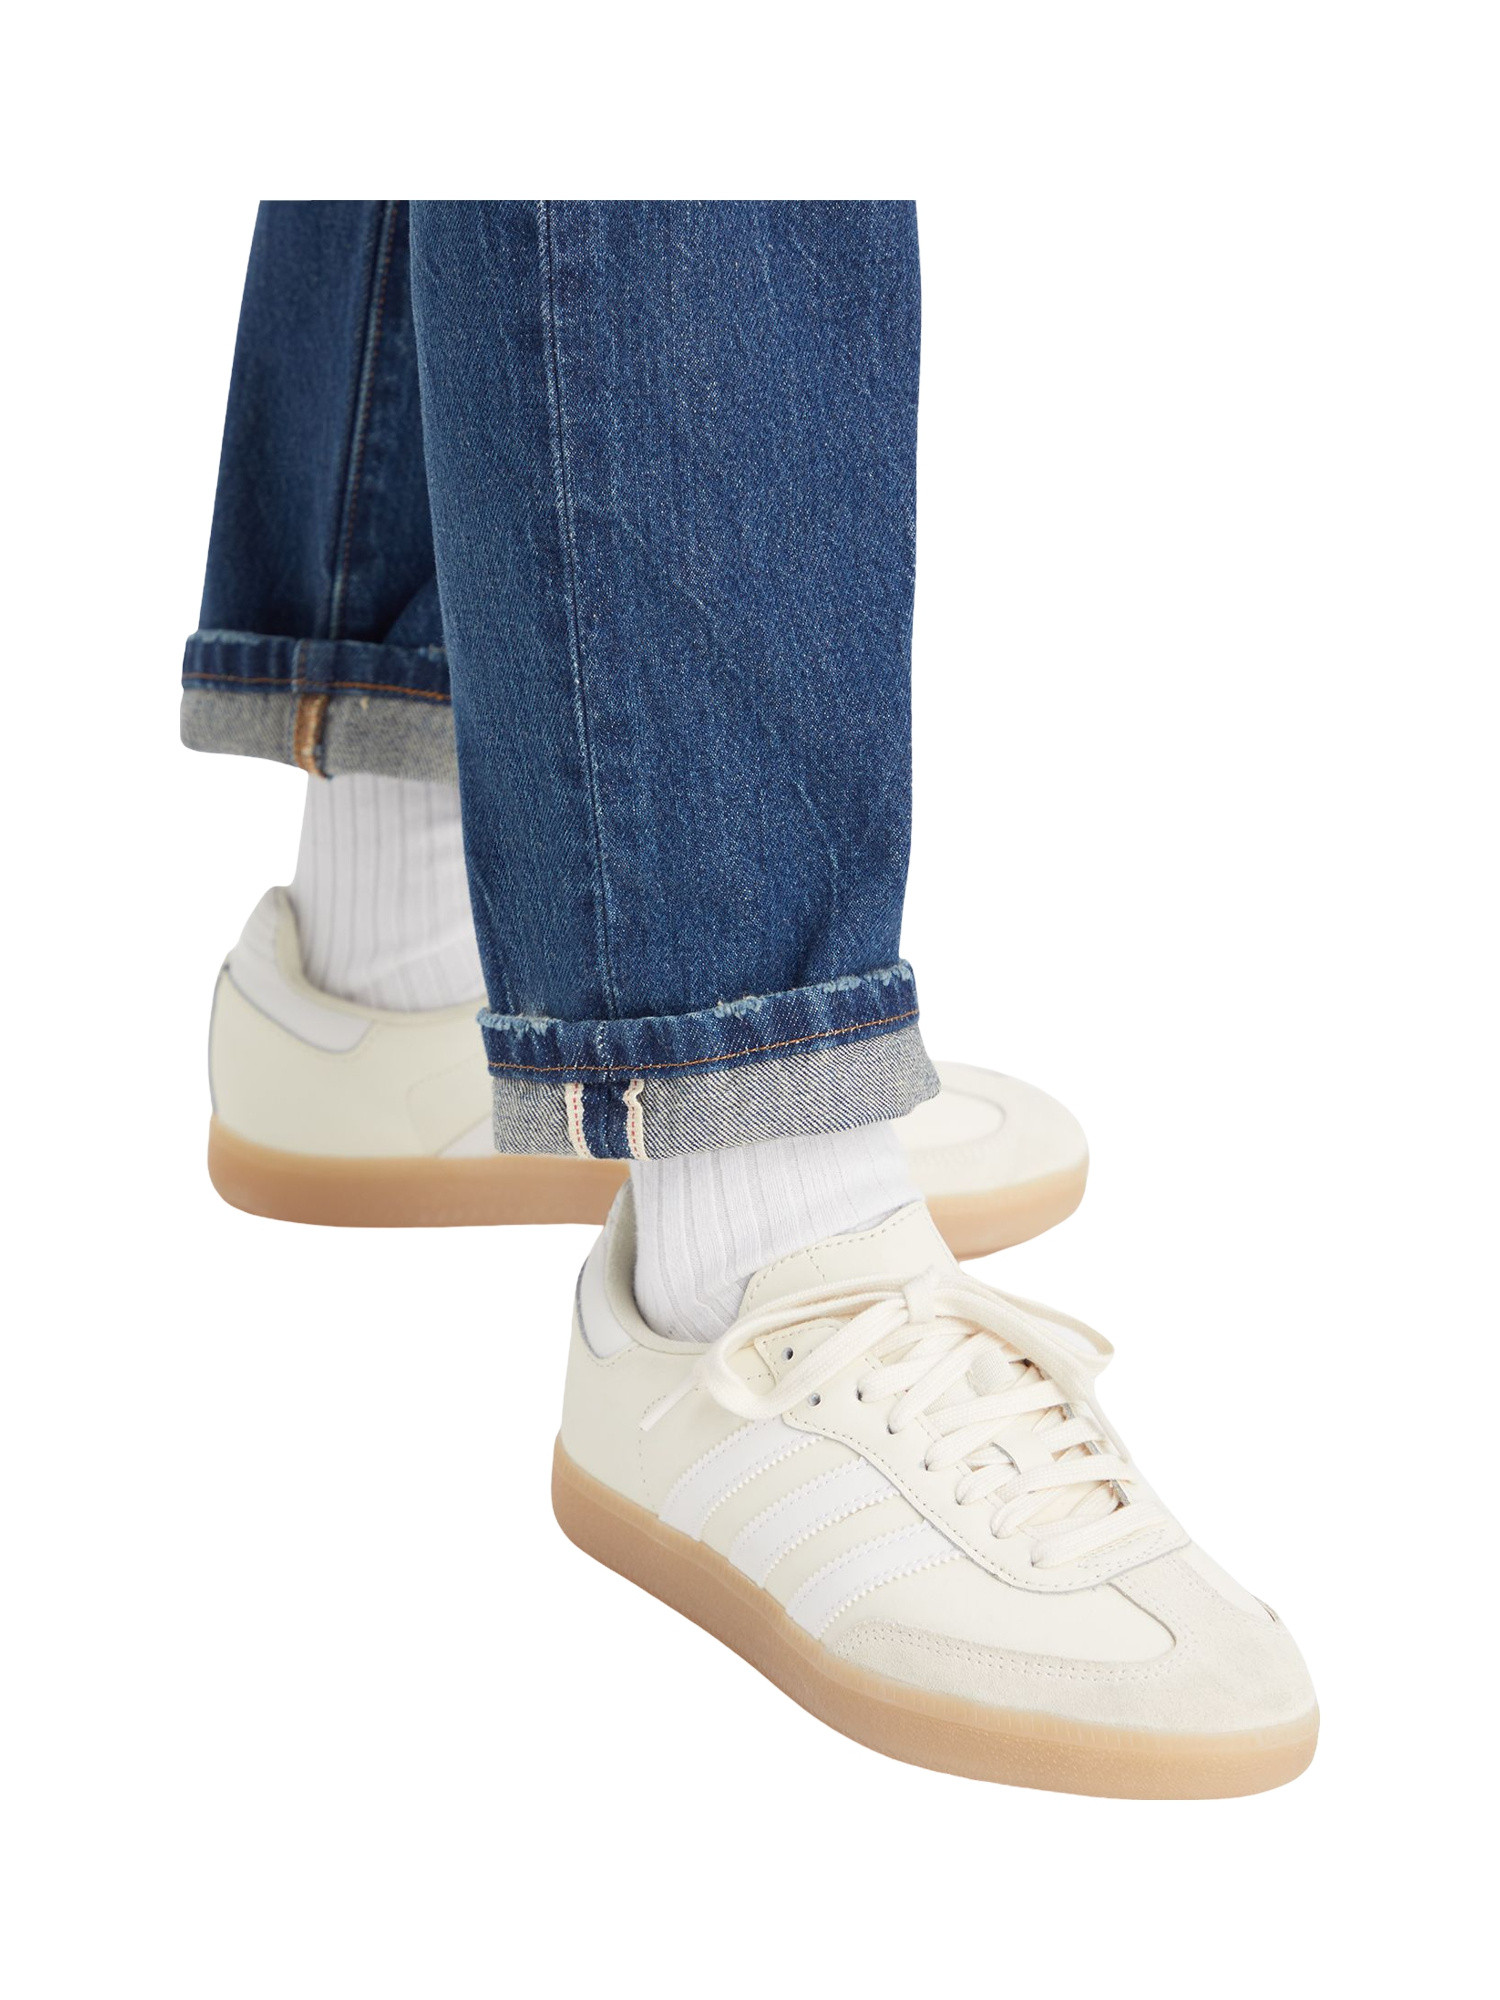 Levi's - 501® original jeans with selvedge, Denim, large image number 6